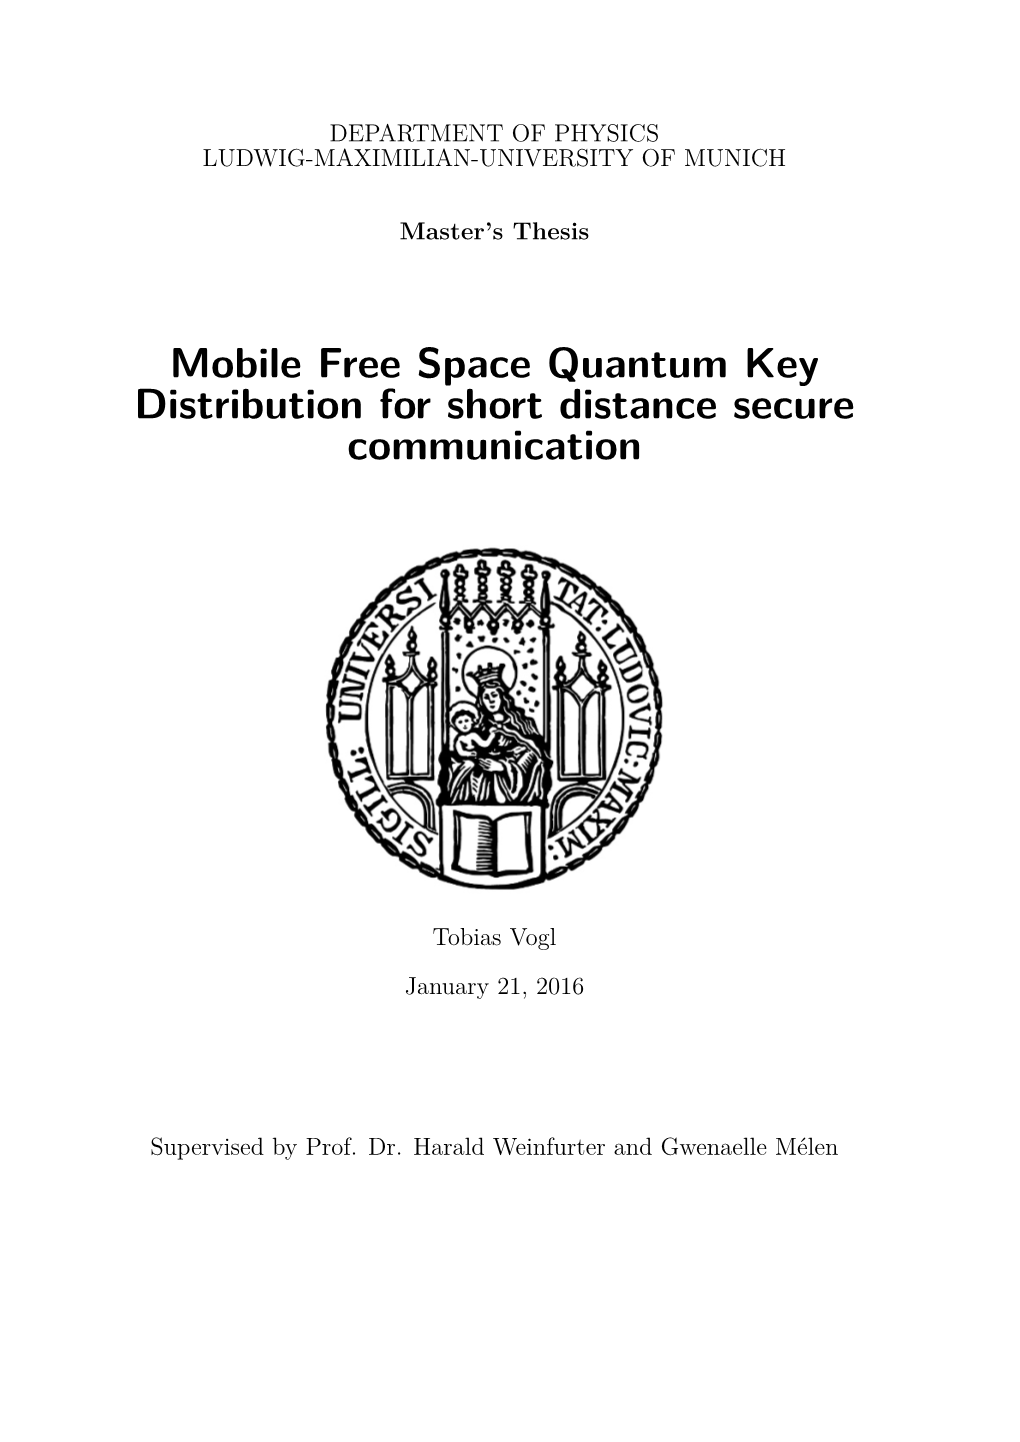 Mobile Free Space Quantum Key Distribution for Short Distance Secure Communication